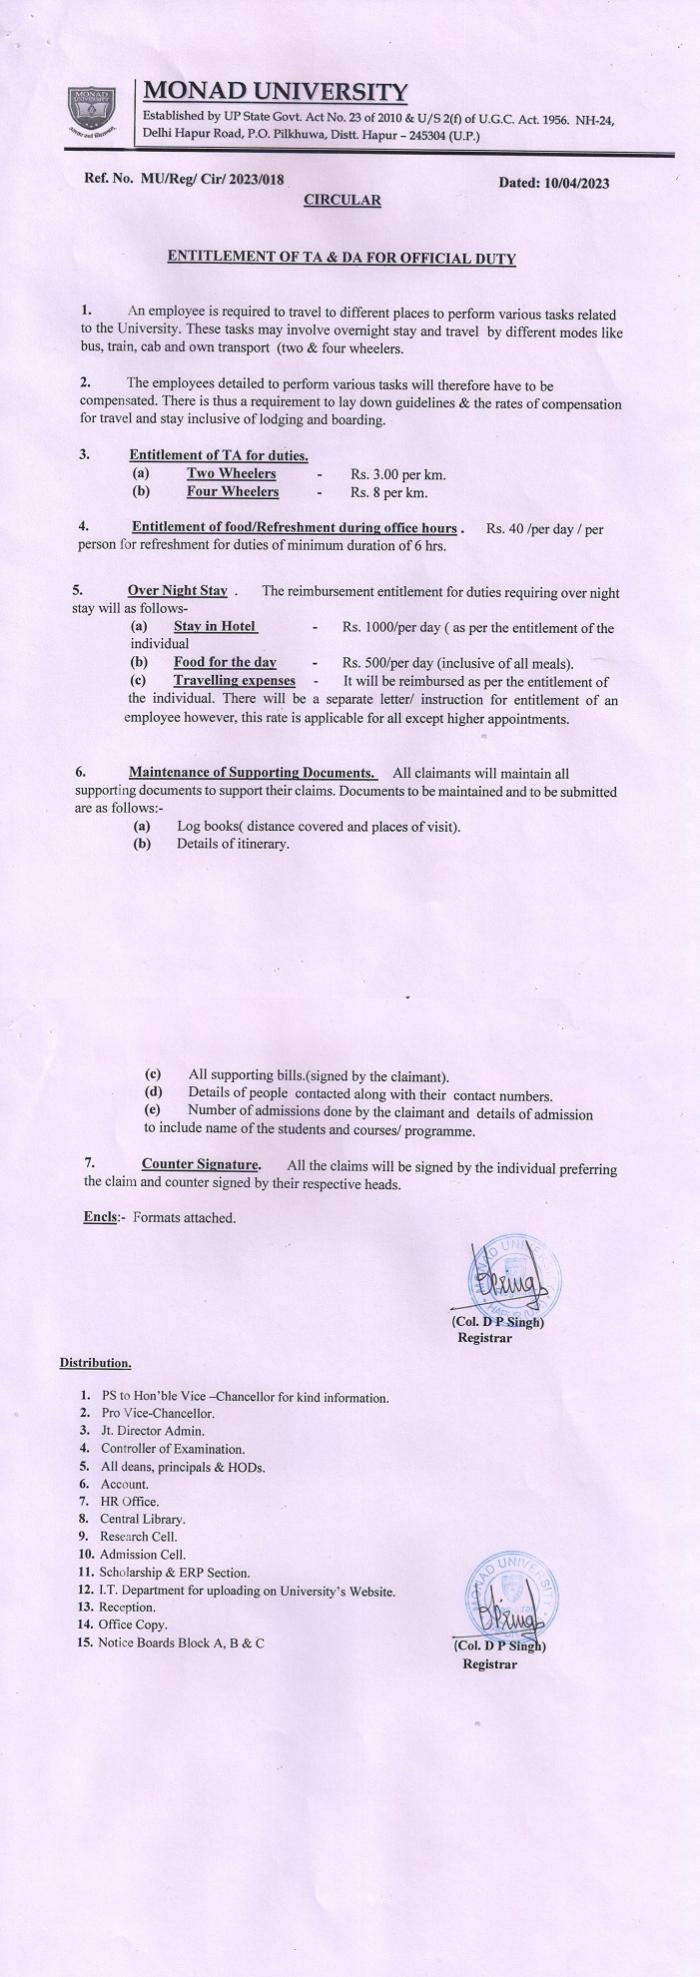 Entitlement of TA & DA for Offical Duty Circular-2023